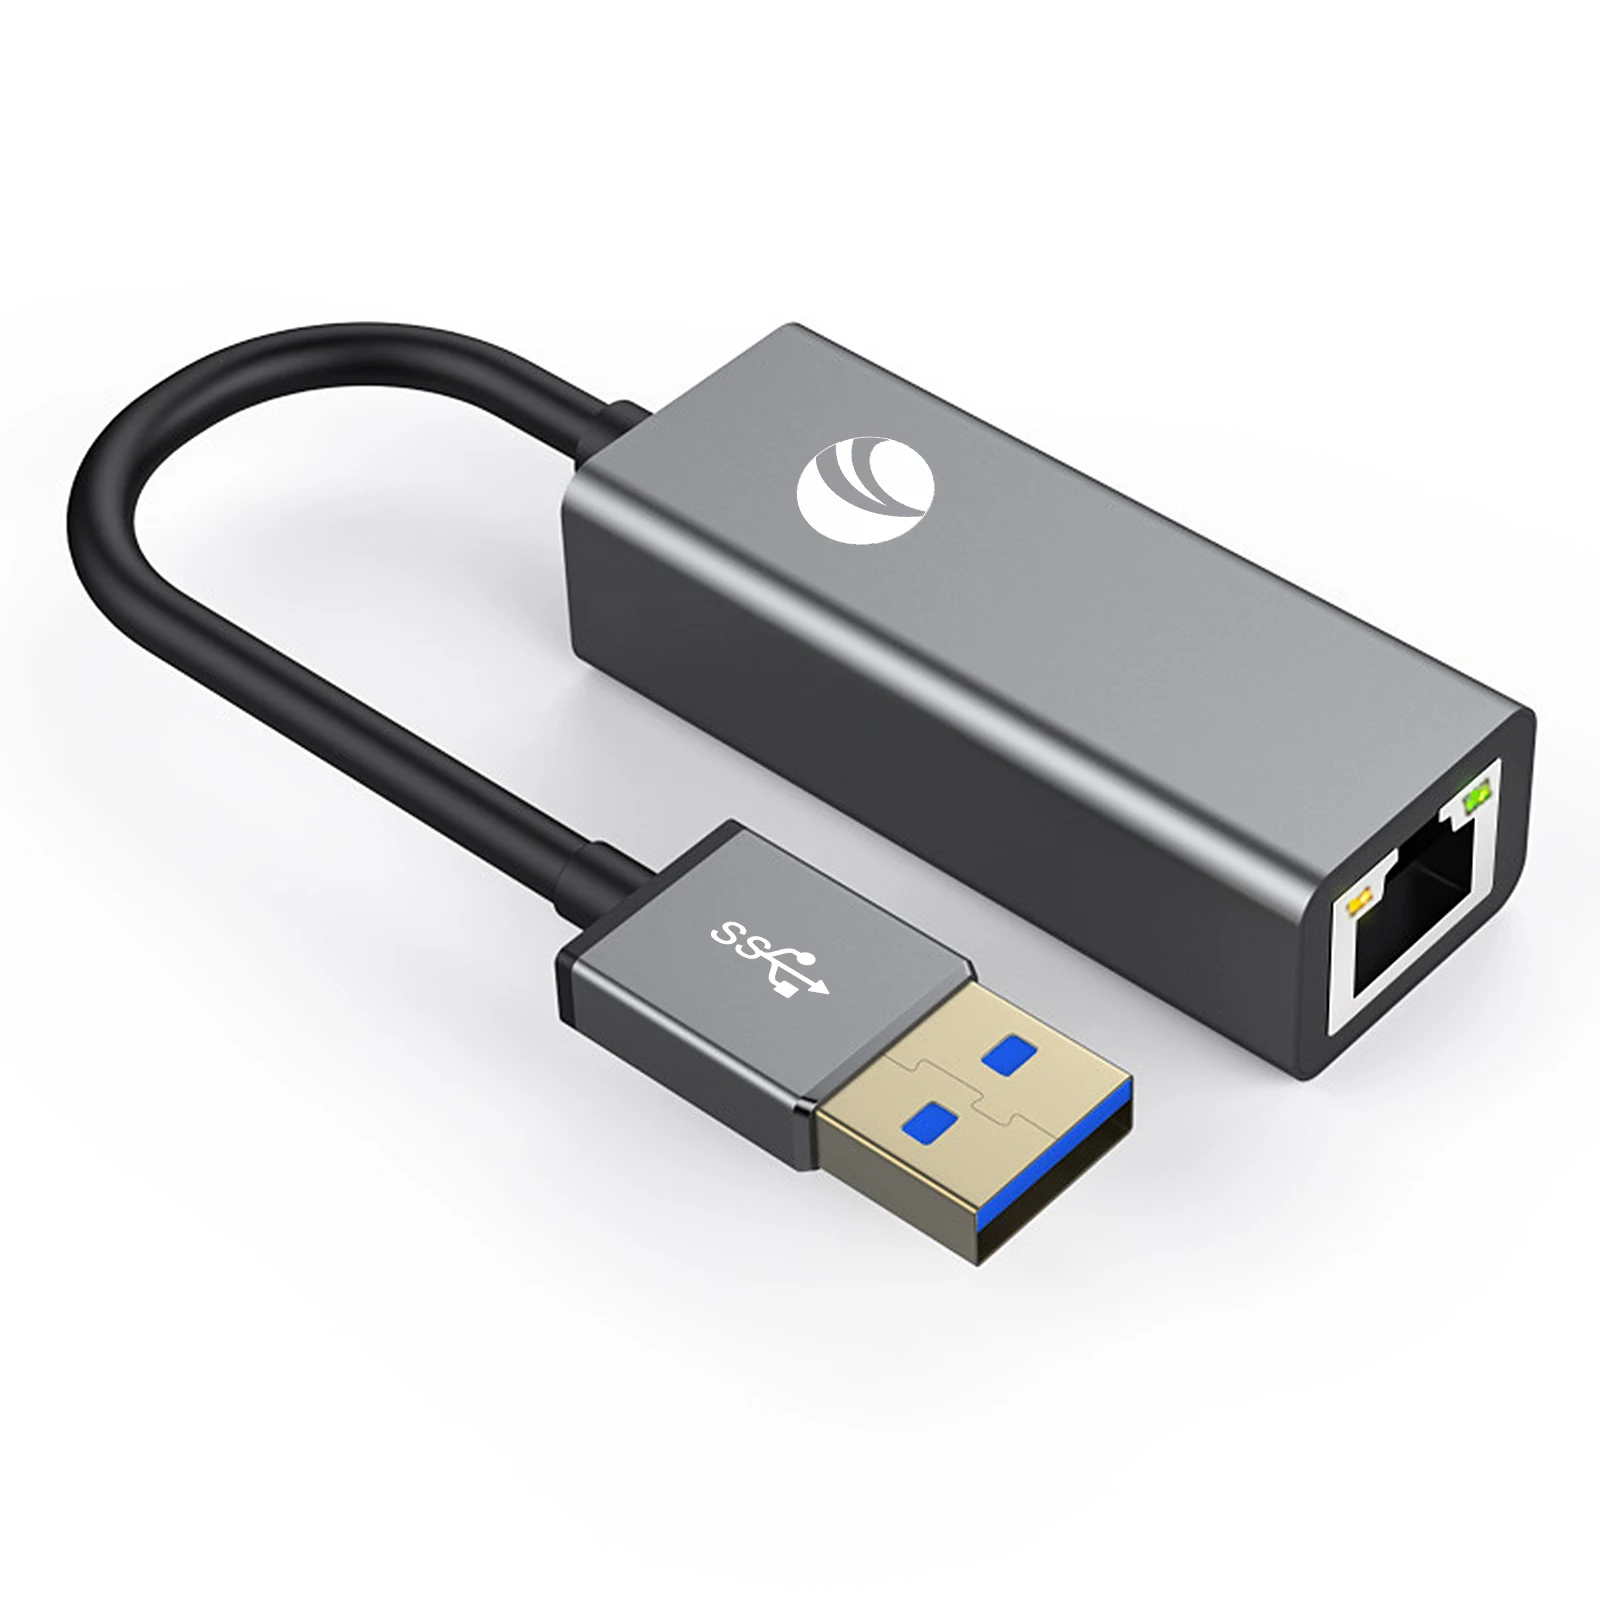 

VCOM External Network Card Lan Adapter USB 3.0 to RJ45 Gigabit Ethernet 1000 Mbps for PC Laptop Windows 10 Mac OS